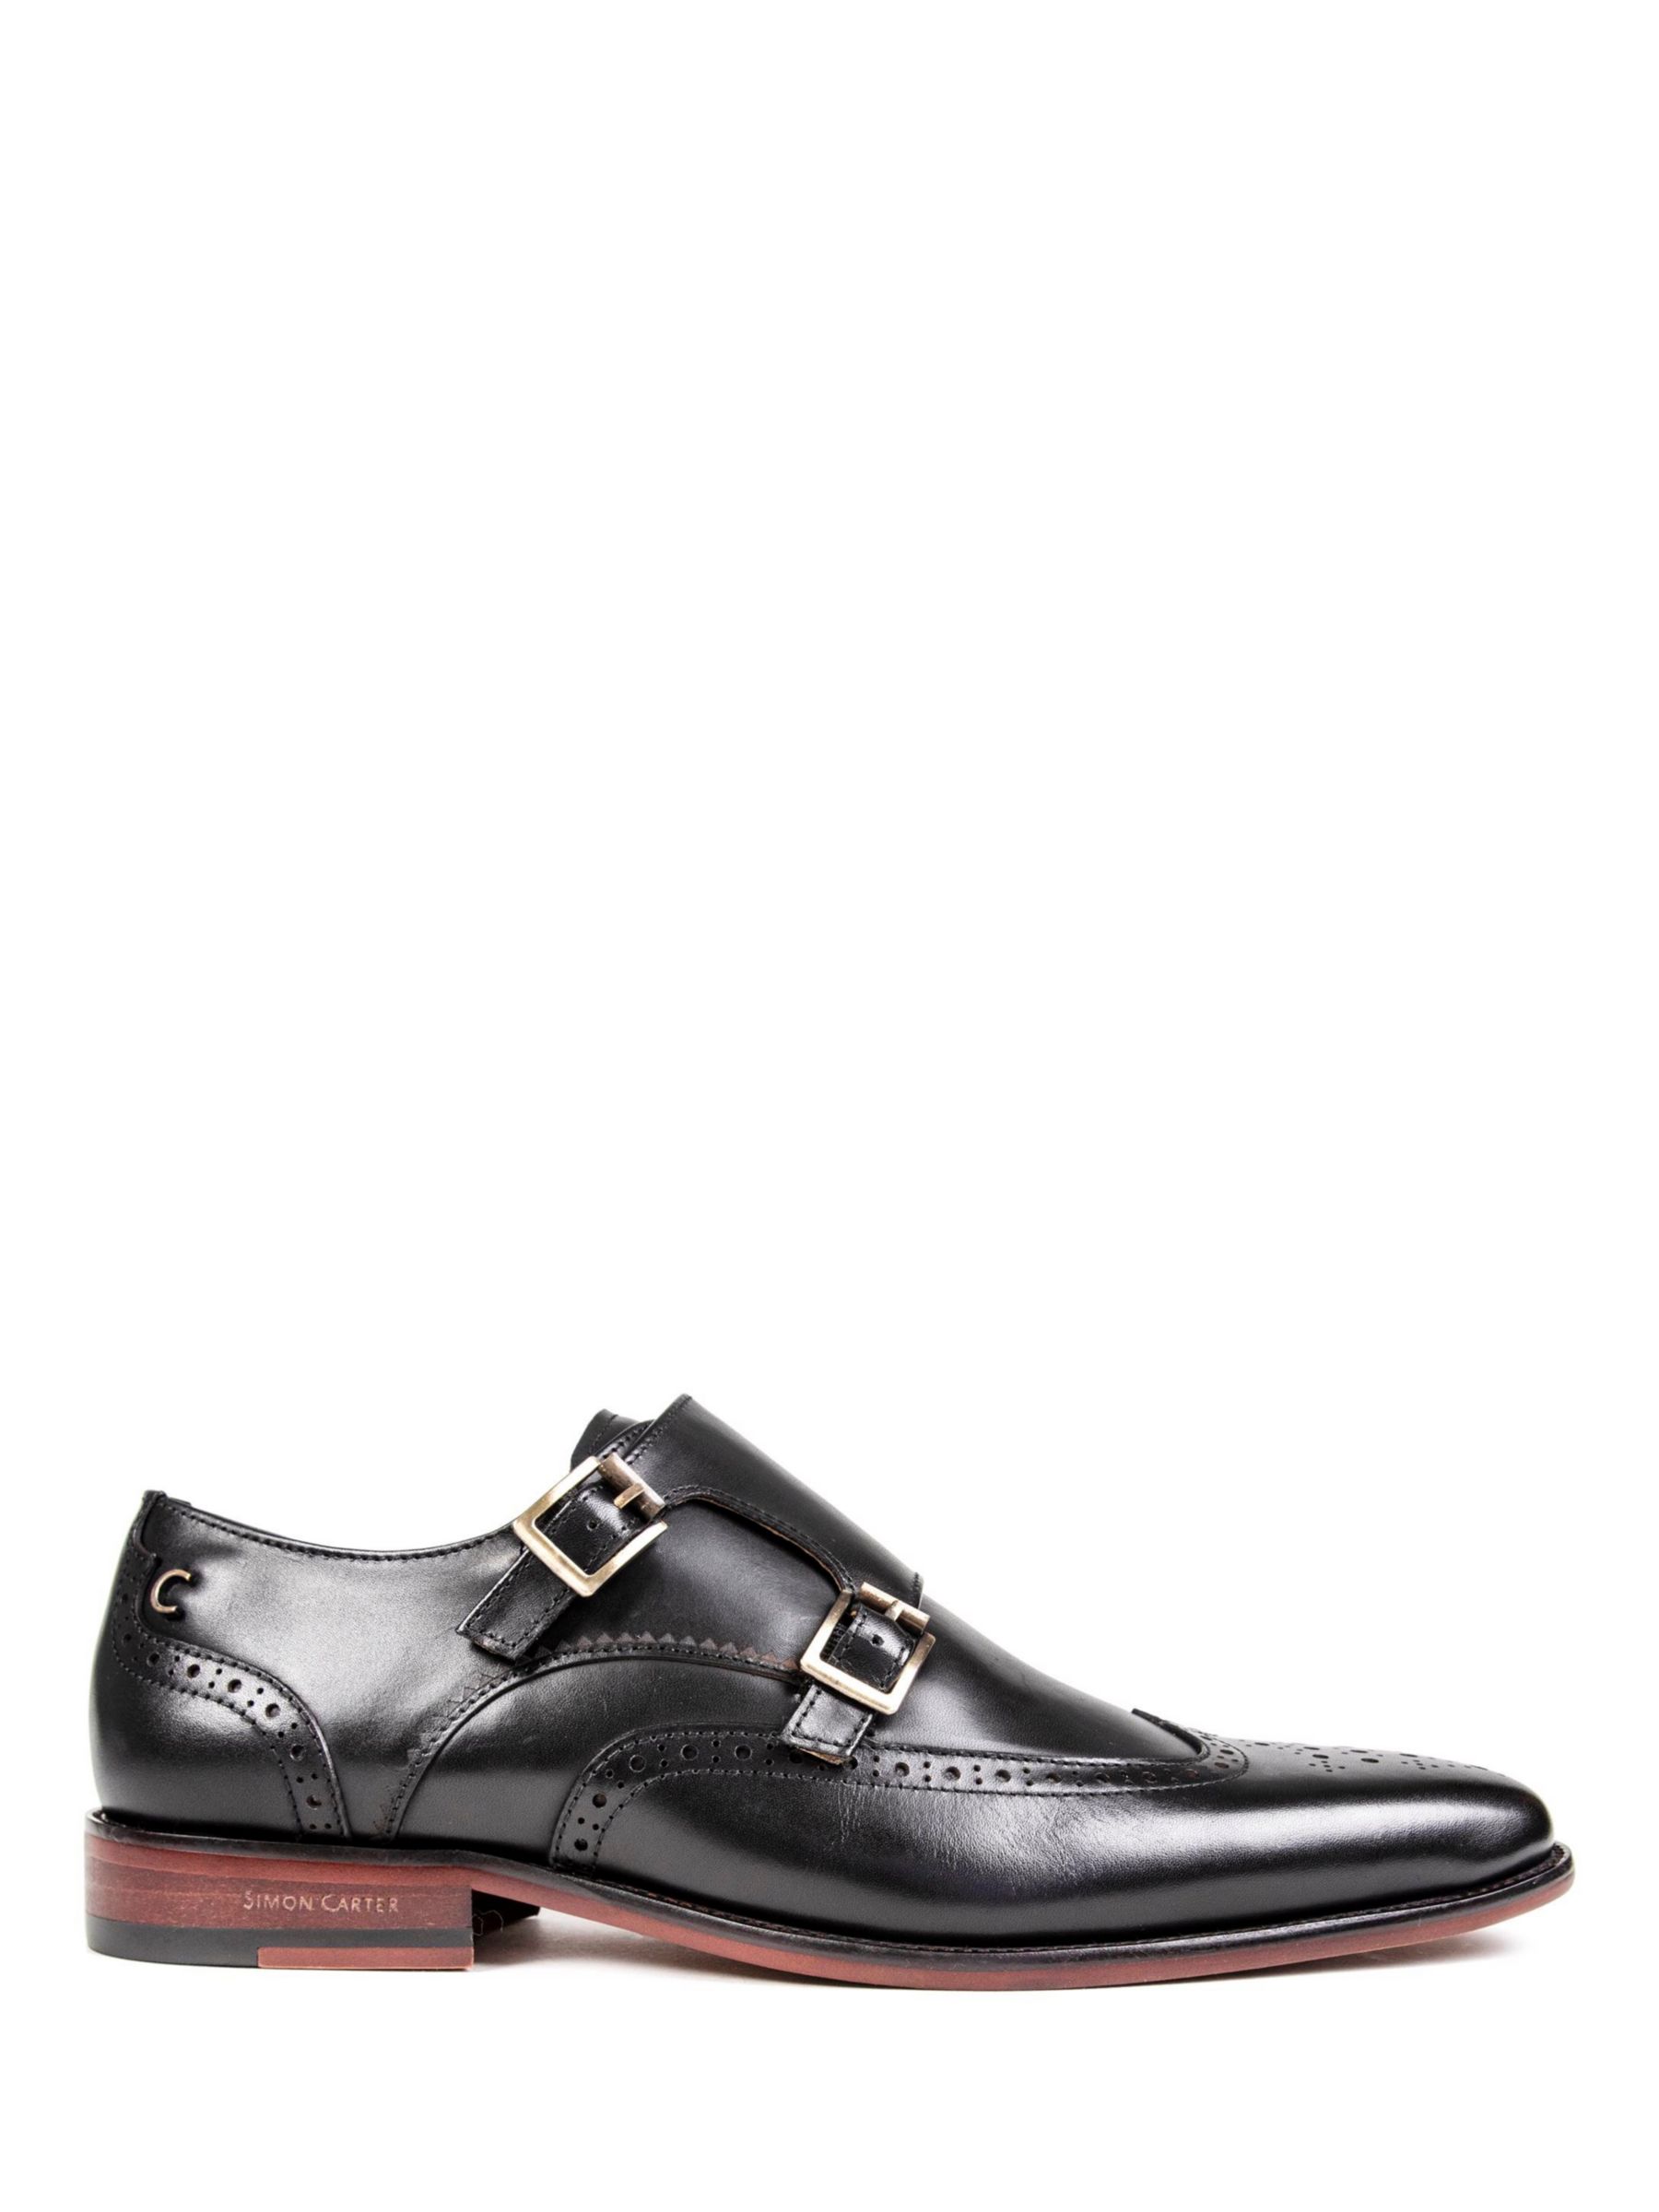 Simon Carter Spaniel Monk Shoes, Black, 10